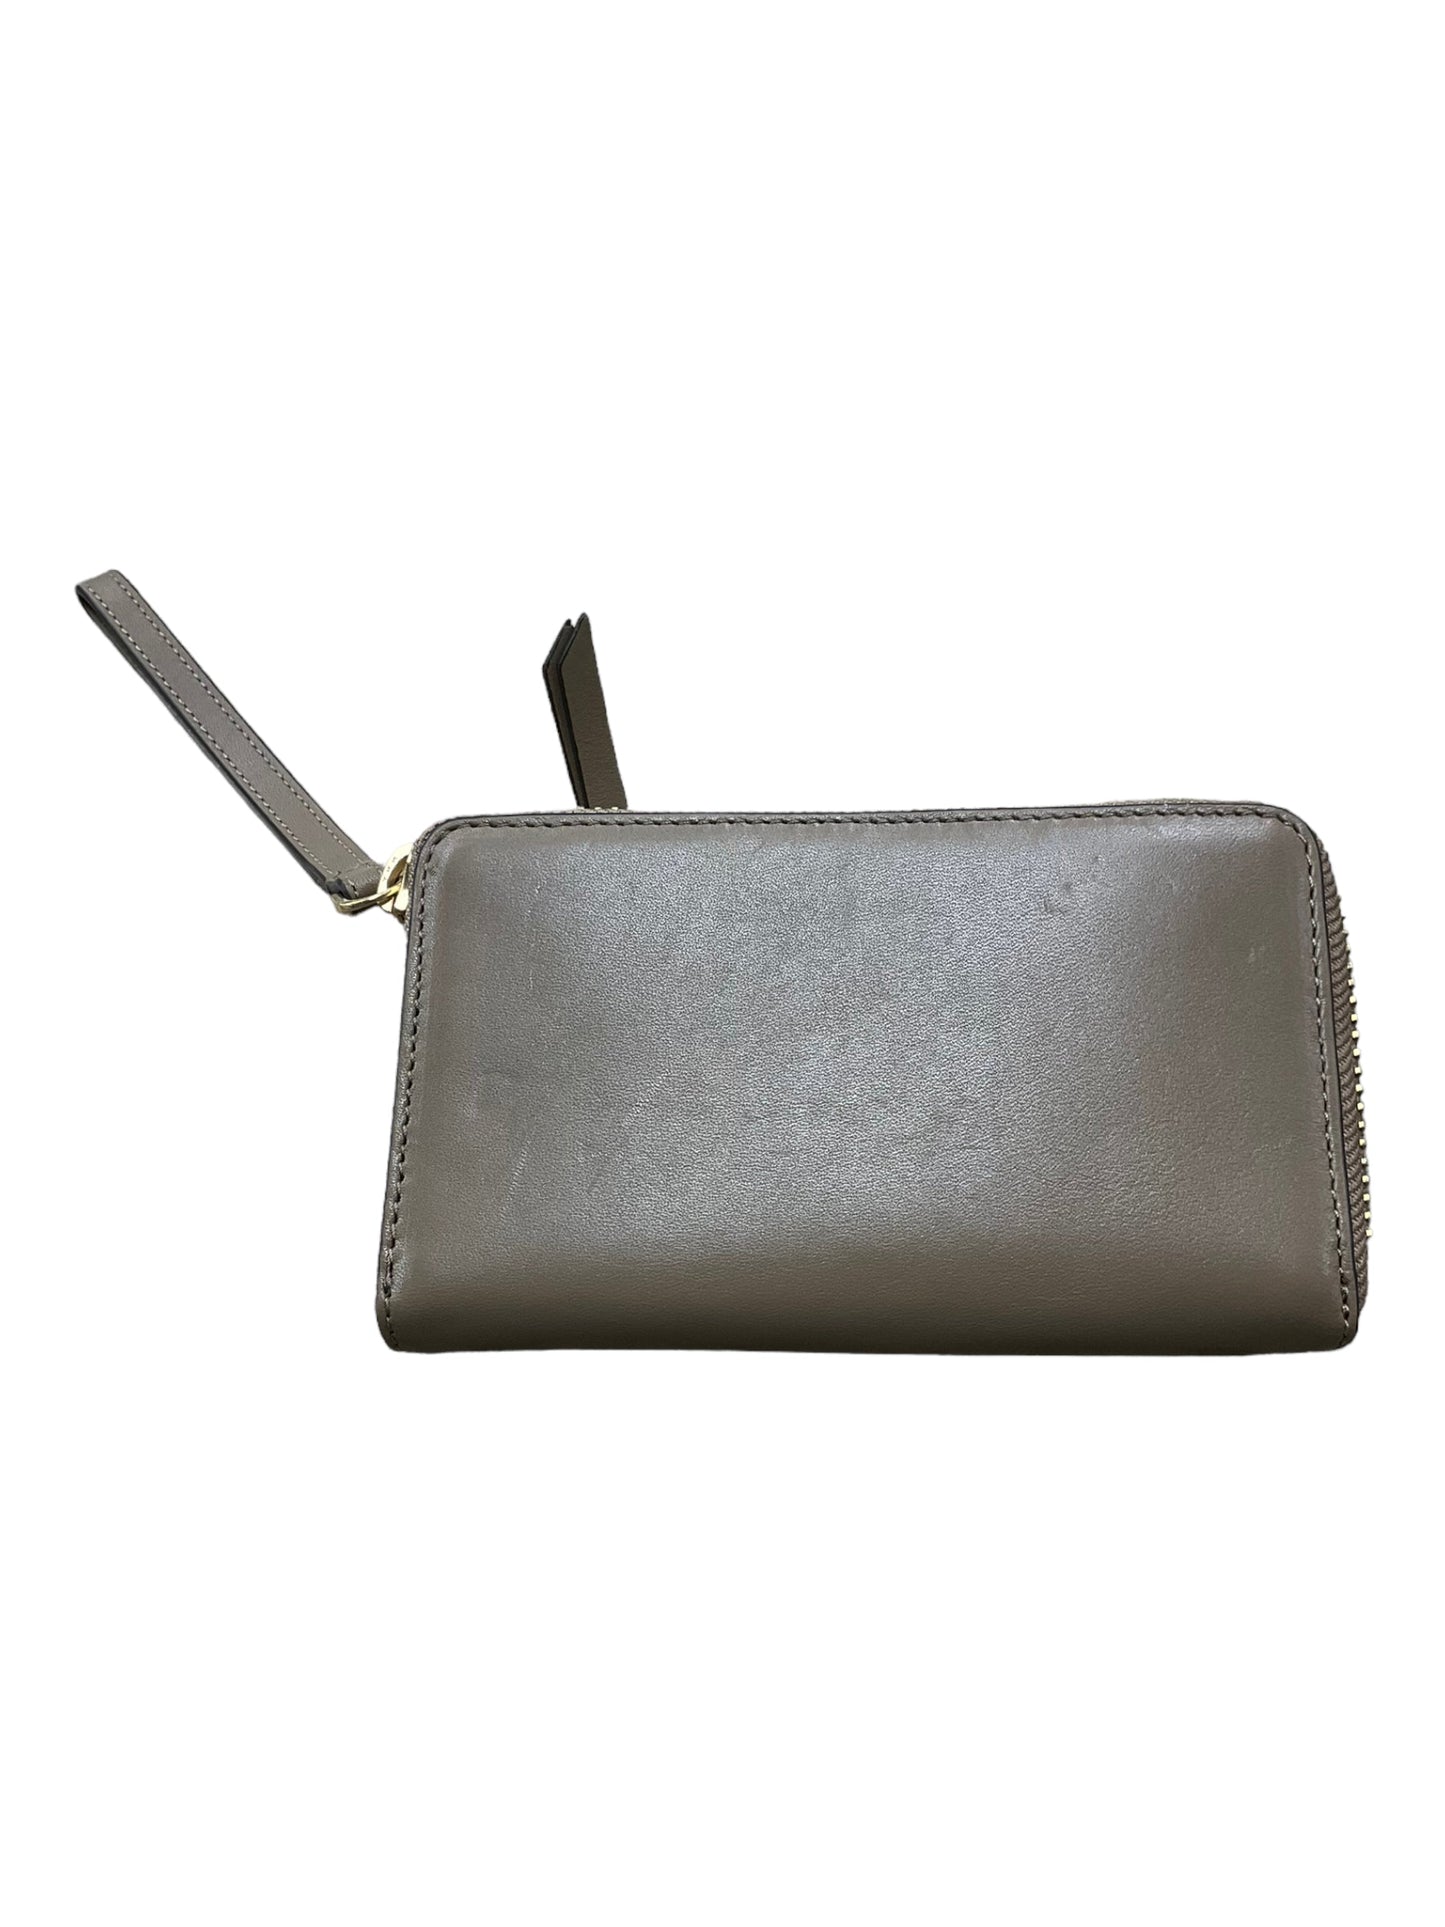 Wallet By Henri Bendel  Size: Medium